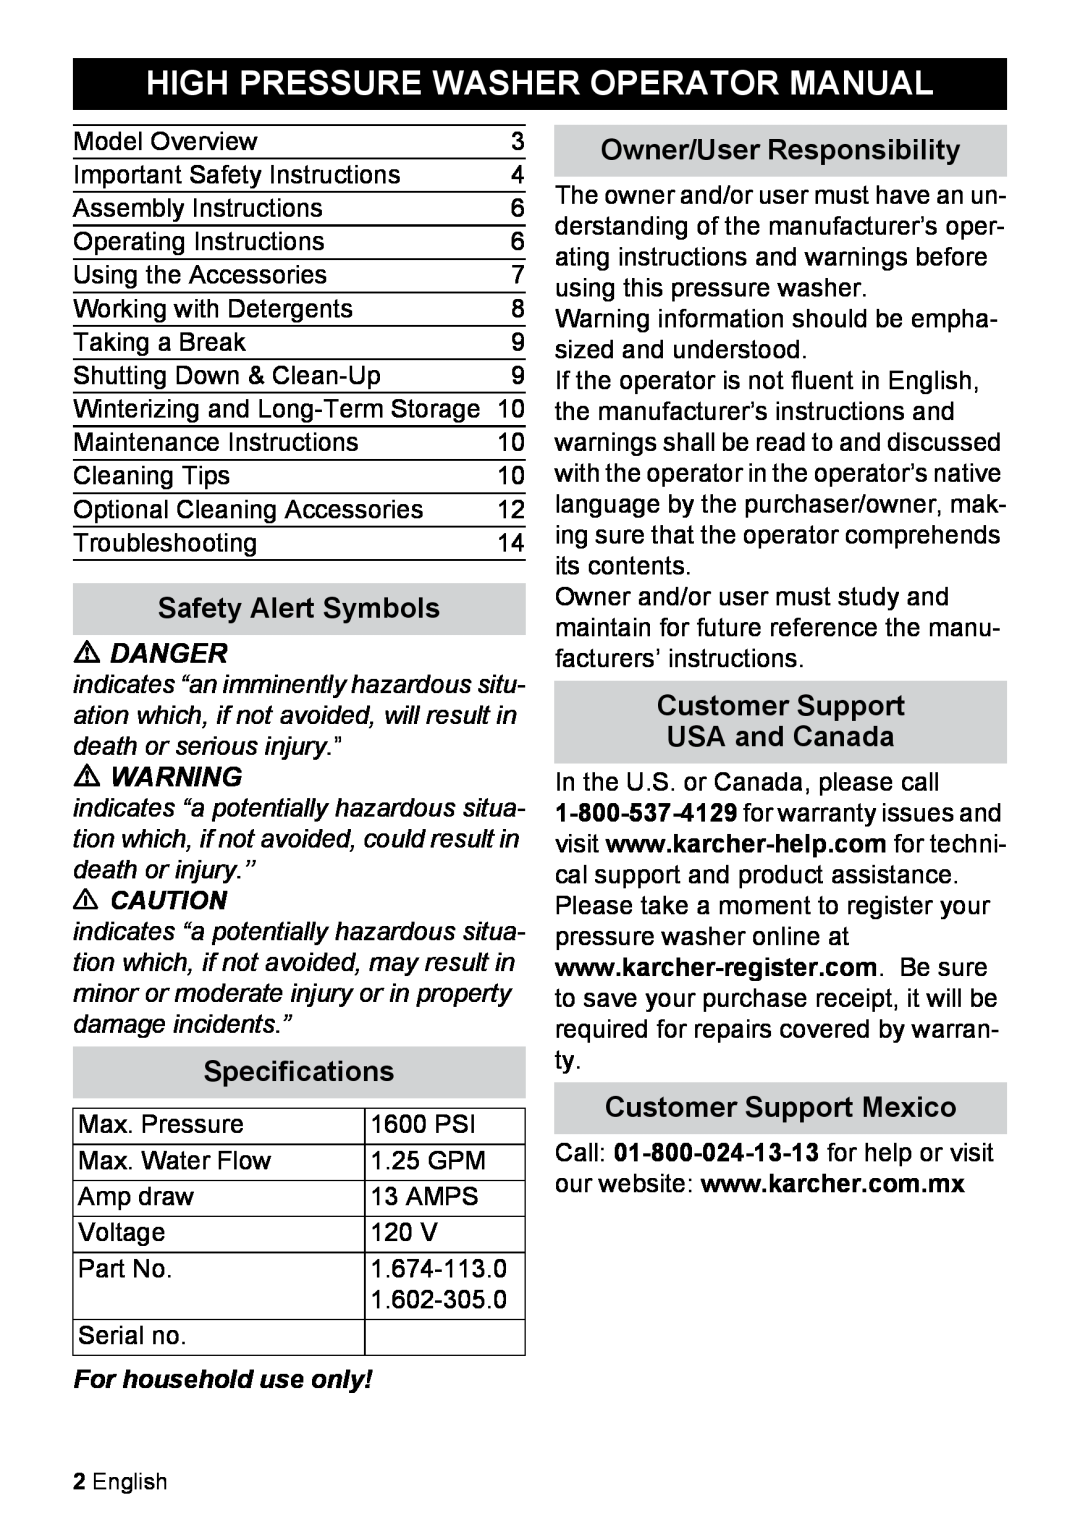 Karcher K 2.425 High Pressure Washer Operator Manual, Safety Alert Symbols, Specifications, Owner/User Responsibility 